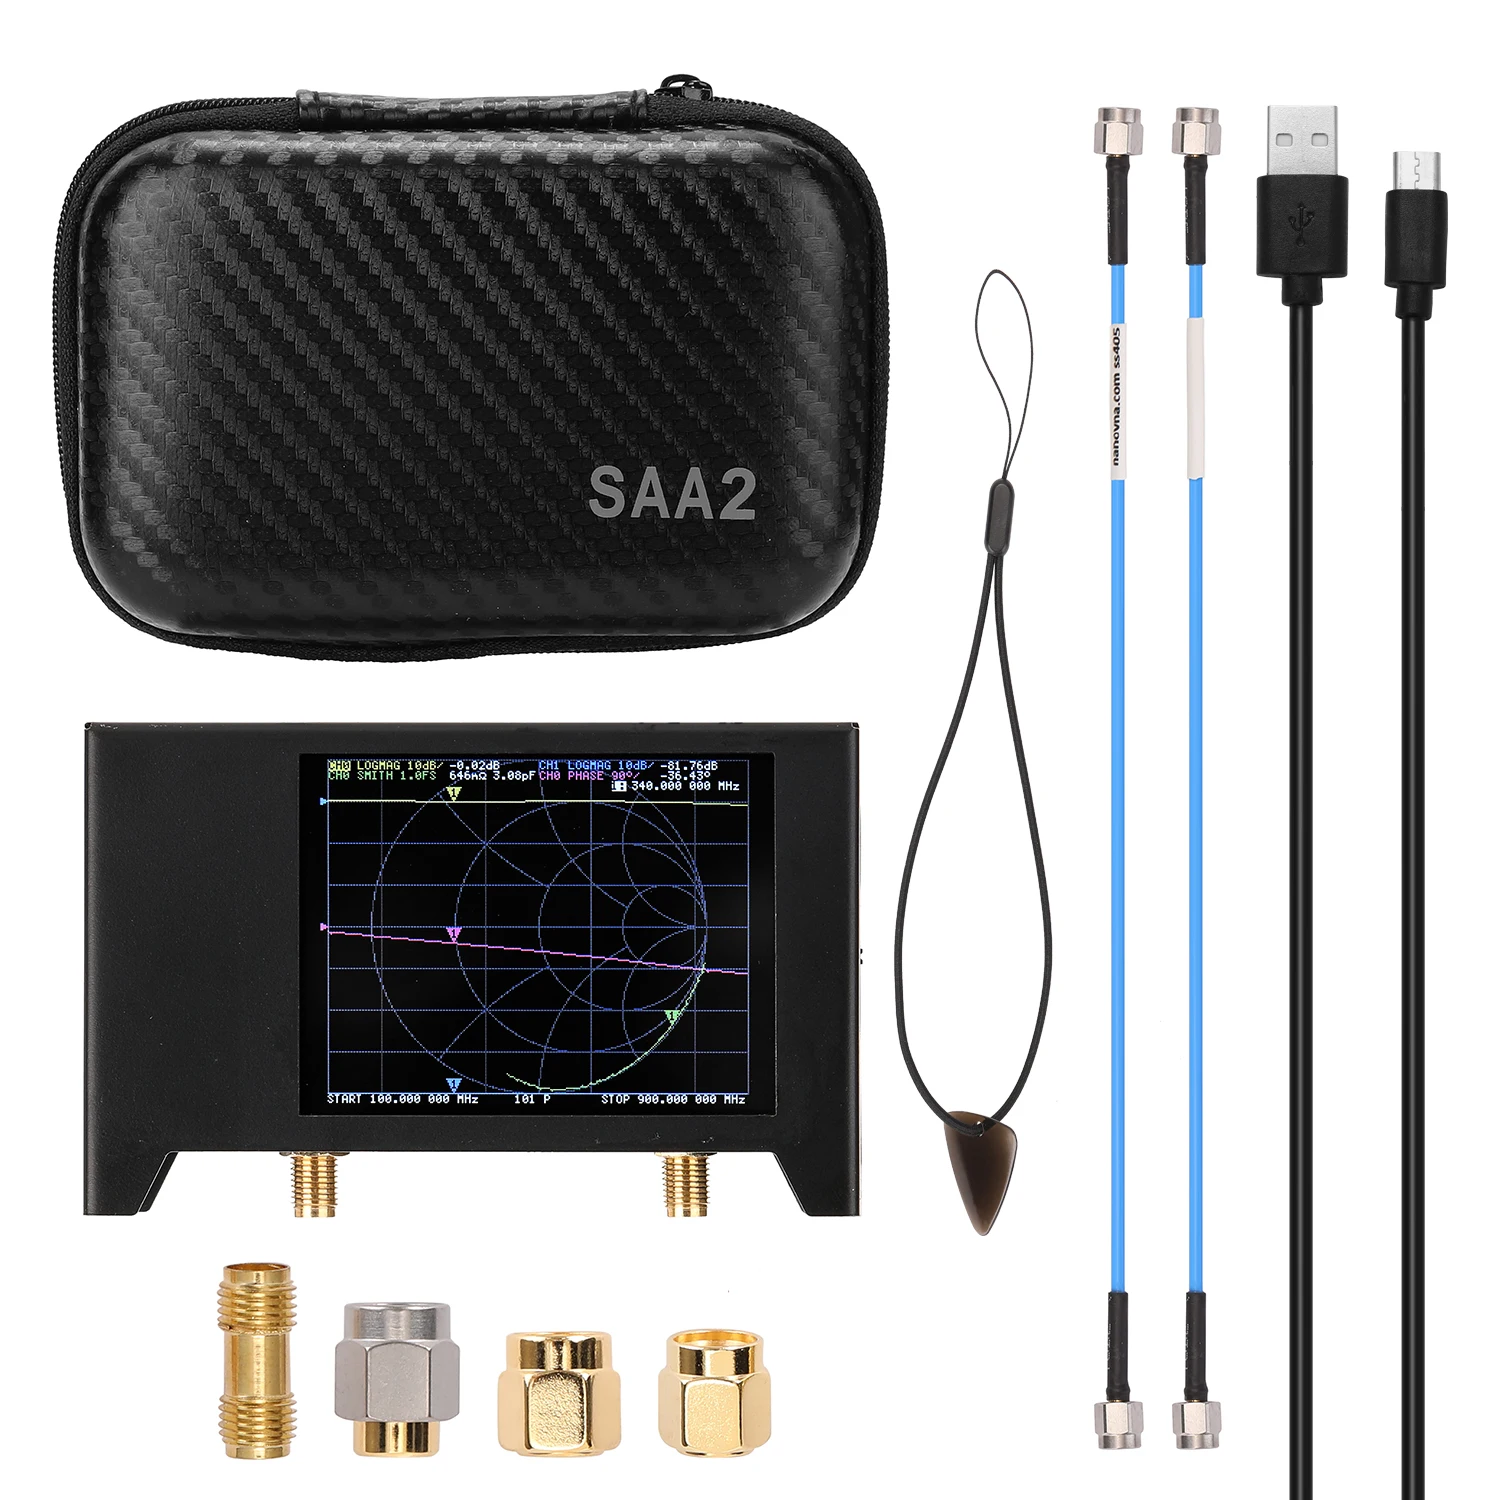 

Векторный анализатор сети, экран 2,8 дюйма, 3 г, S-A-A-2 NanoVNA V2, антенный анализатор, коротковолновый HF VHF UHF с железным корпусом